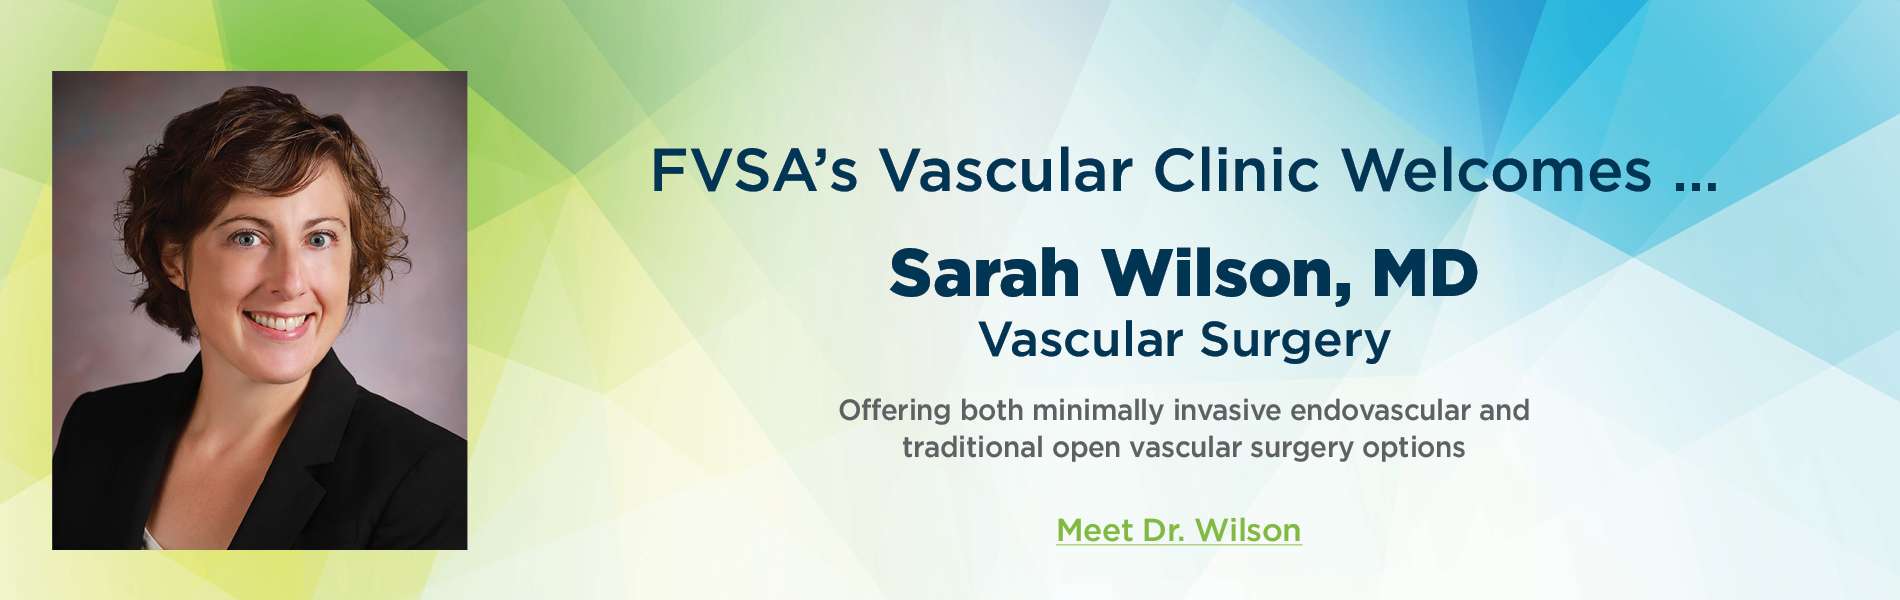 FVSS Welcomes Dr. Sarah Wilson